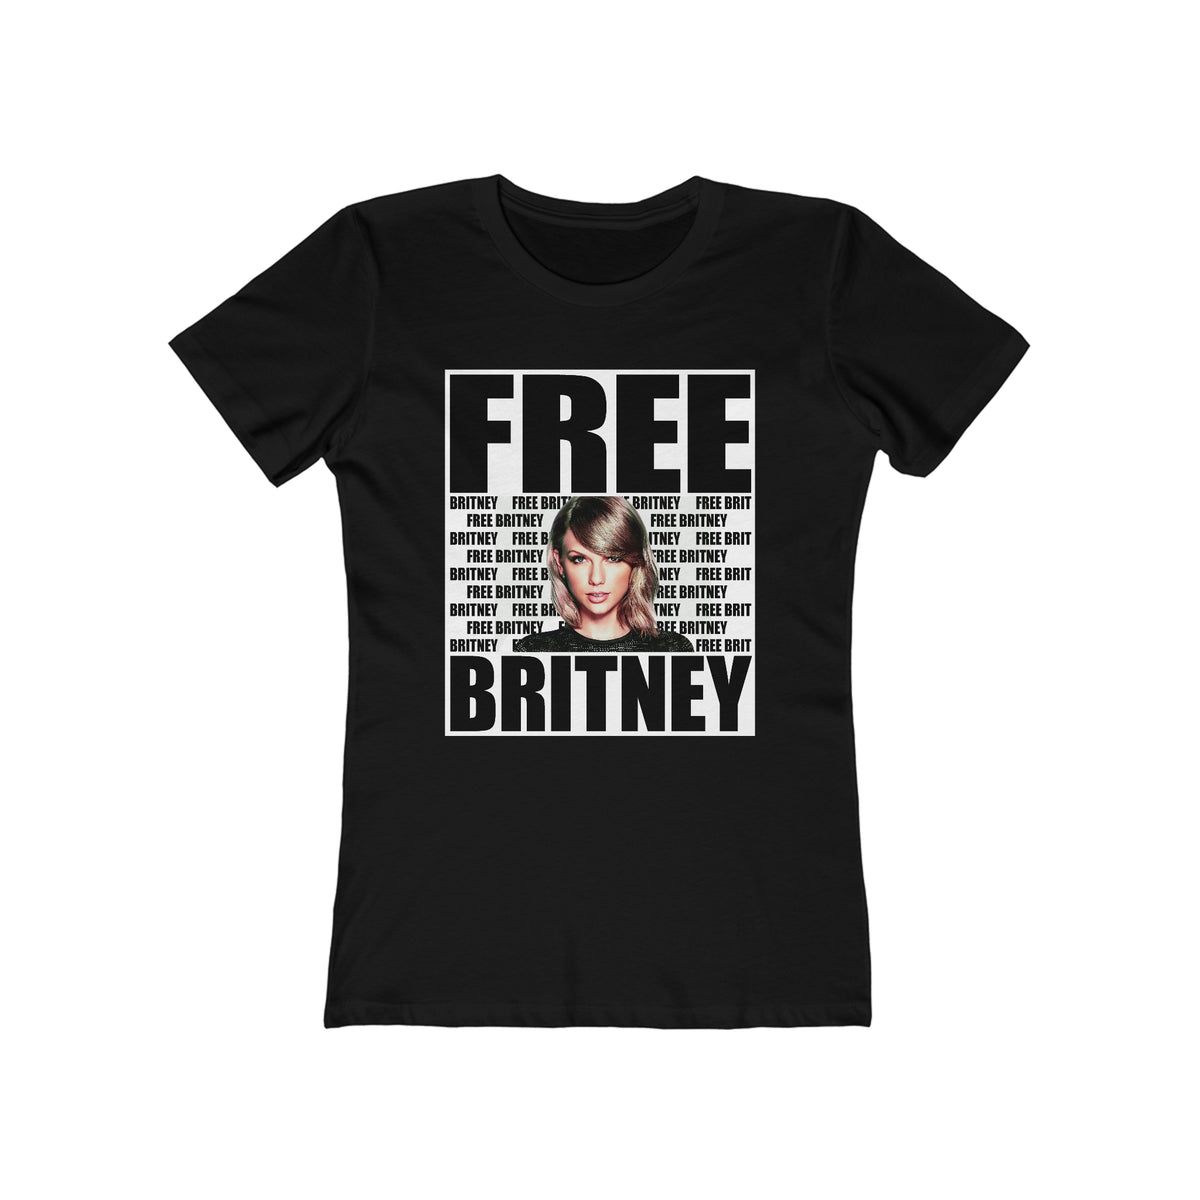 Free Britney (Taylor Swift) - Women’s T-Shirt